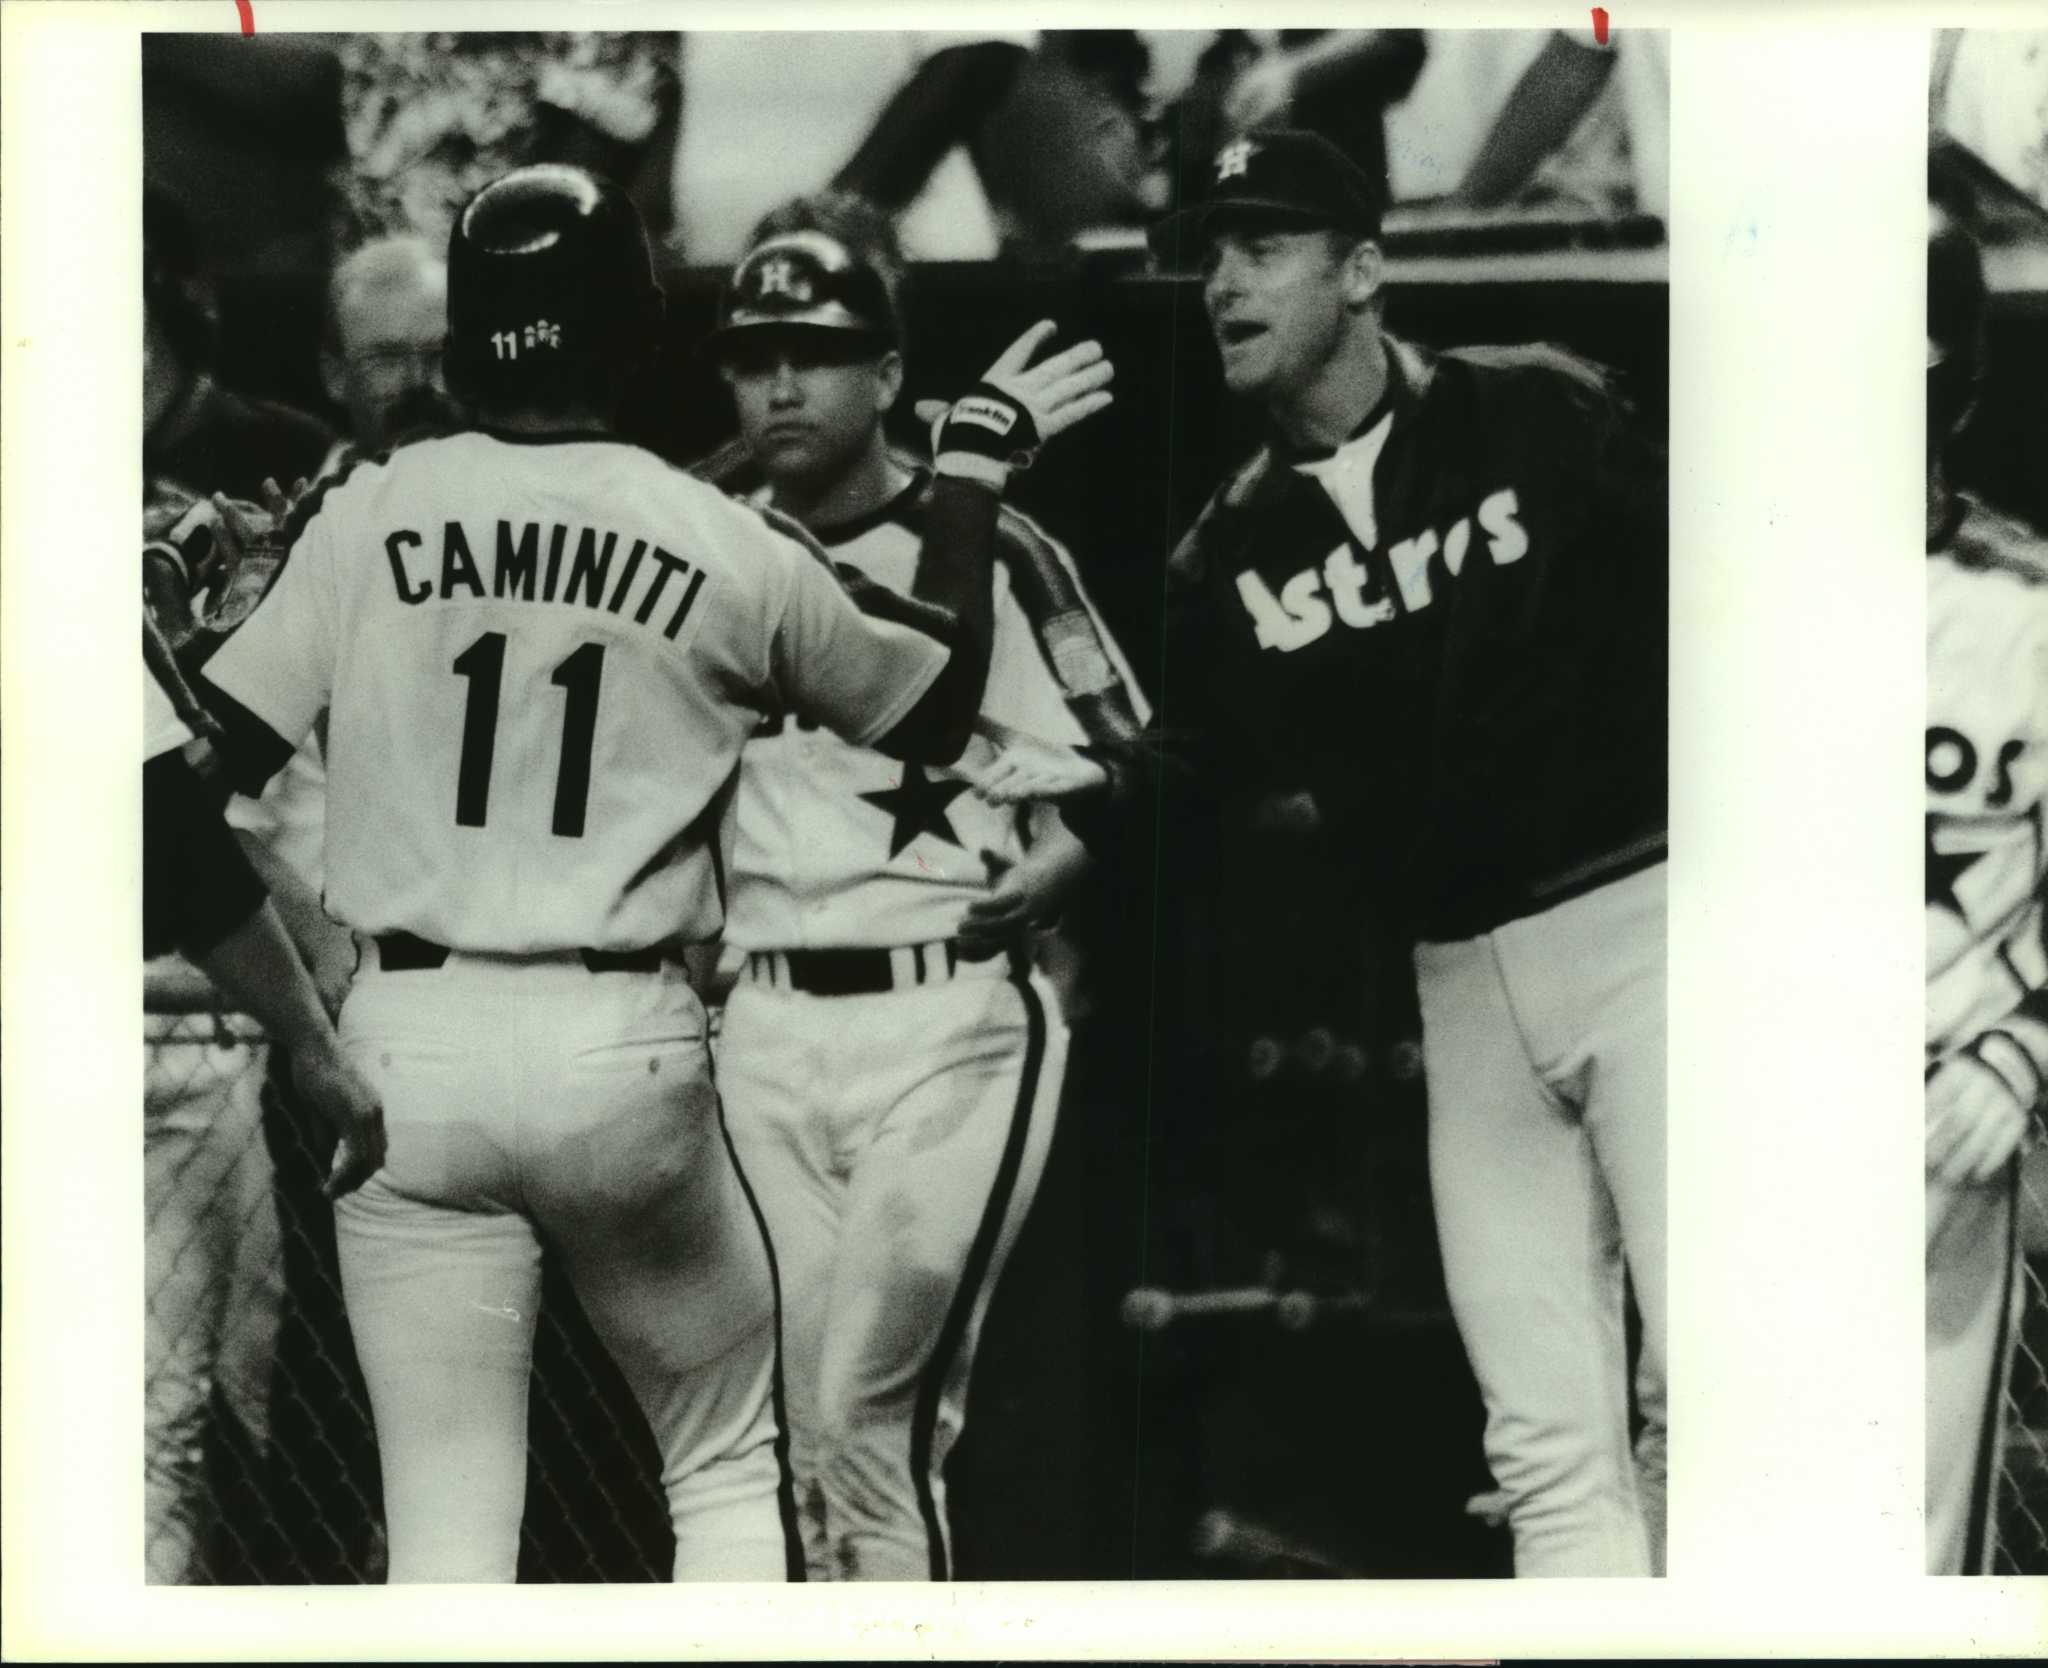 When former Houston Astros star Ken Caminiti succumbed to drug